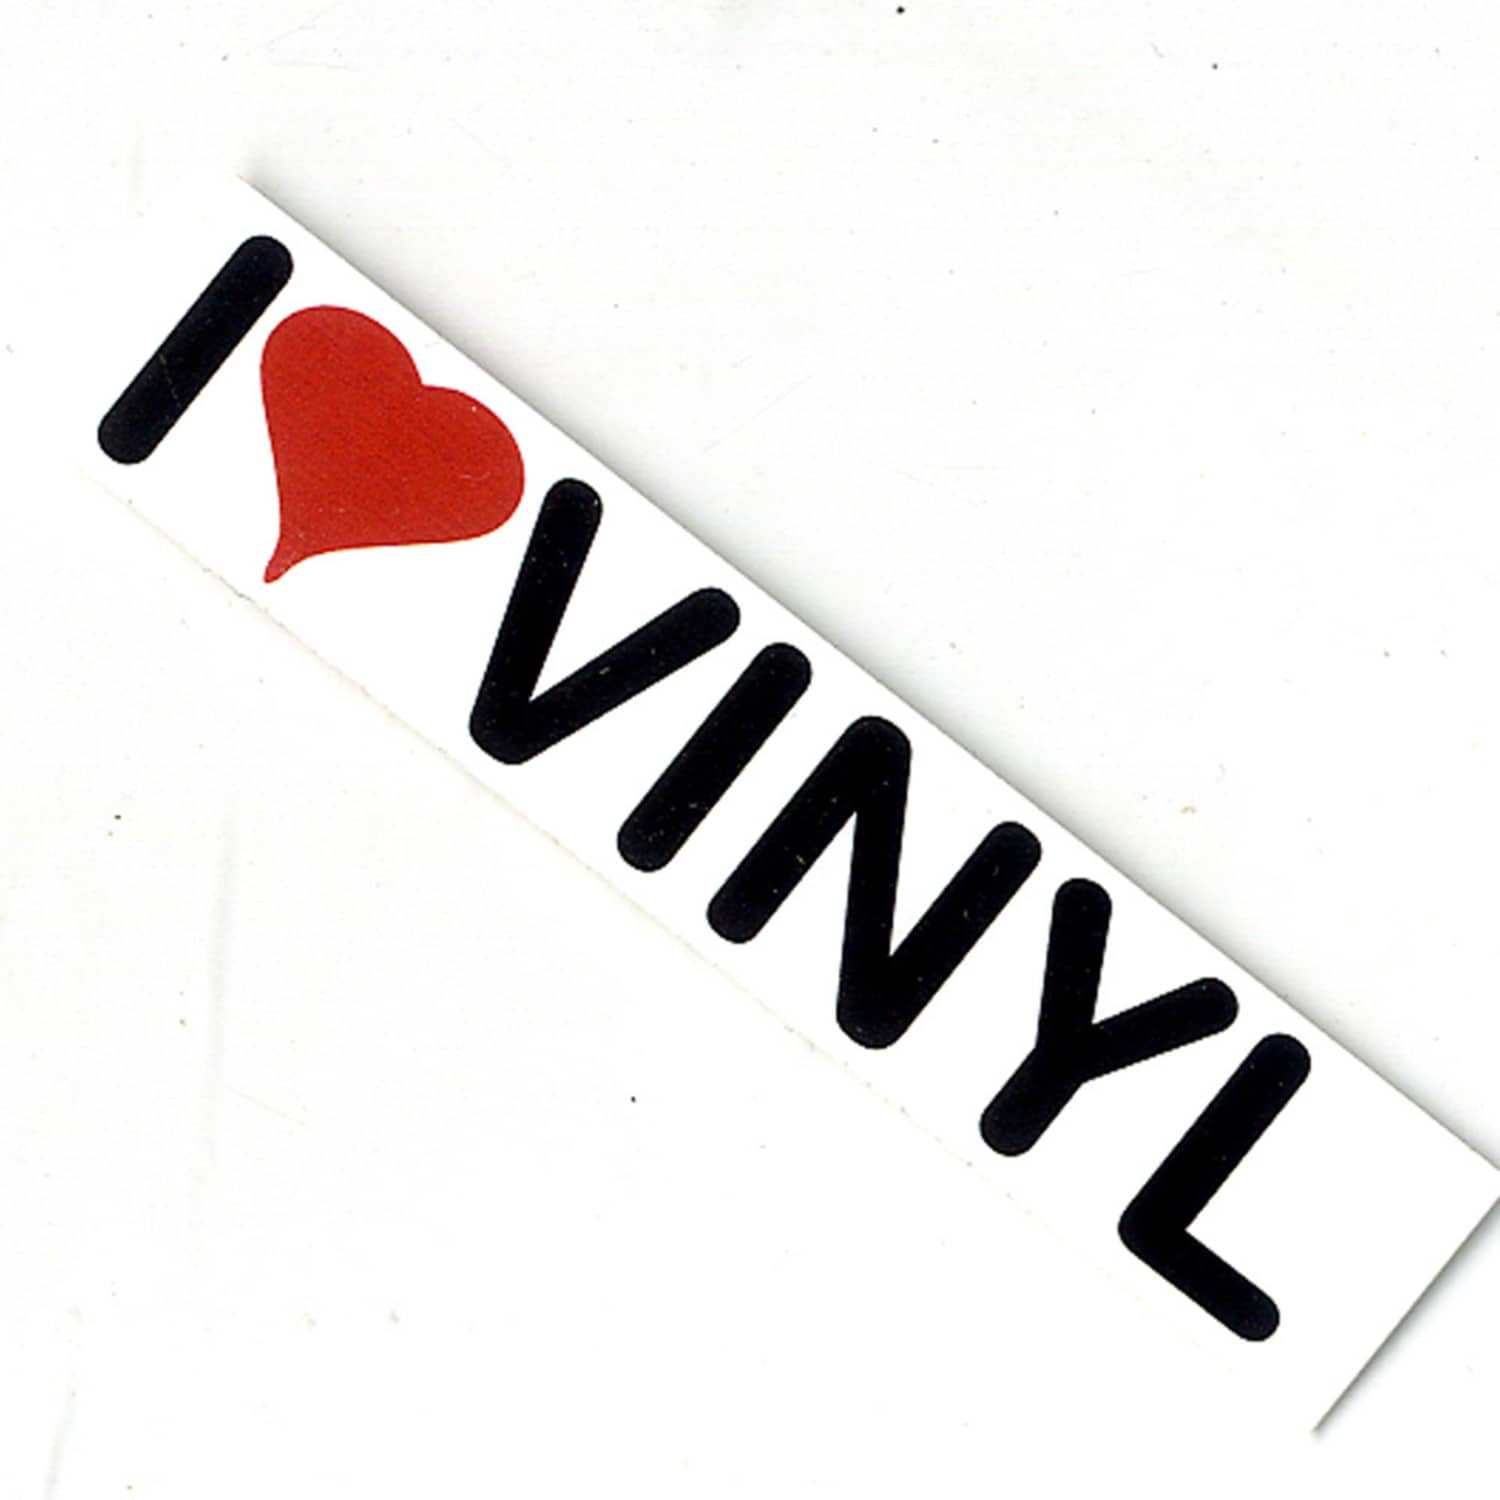 Sticker - I LOVE VINYL Sticker 